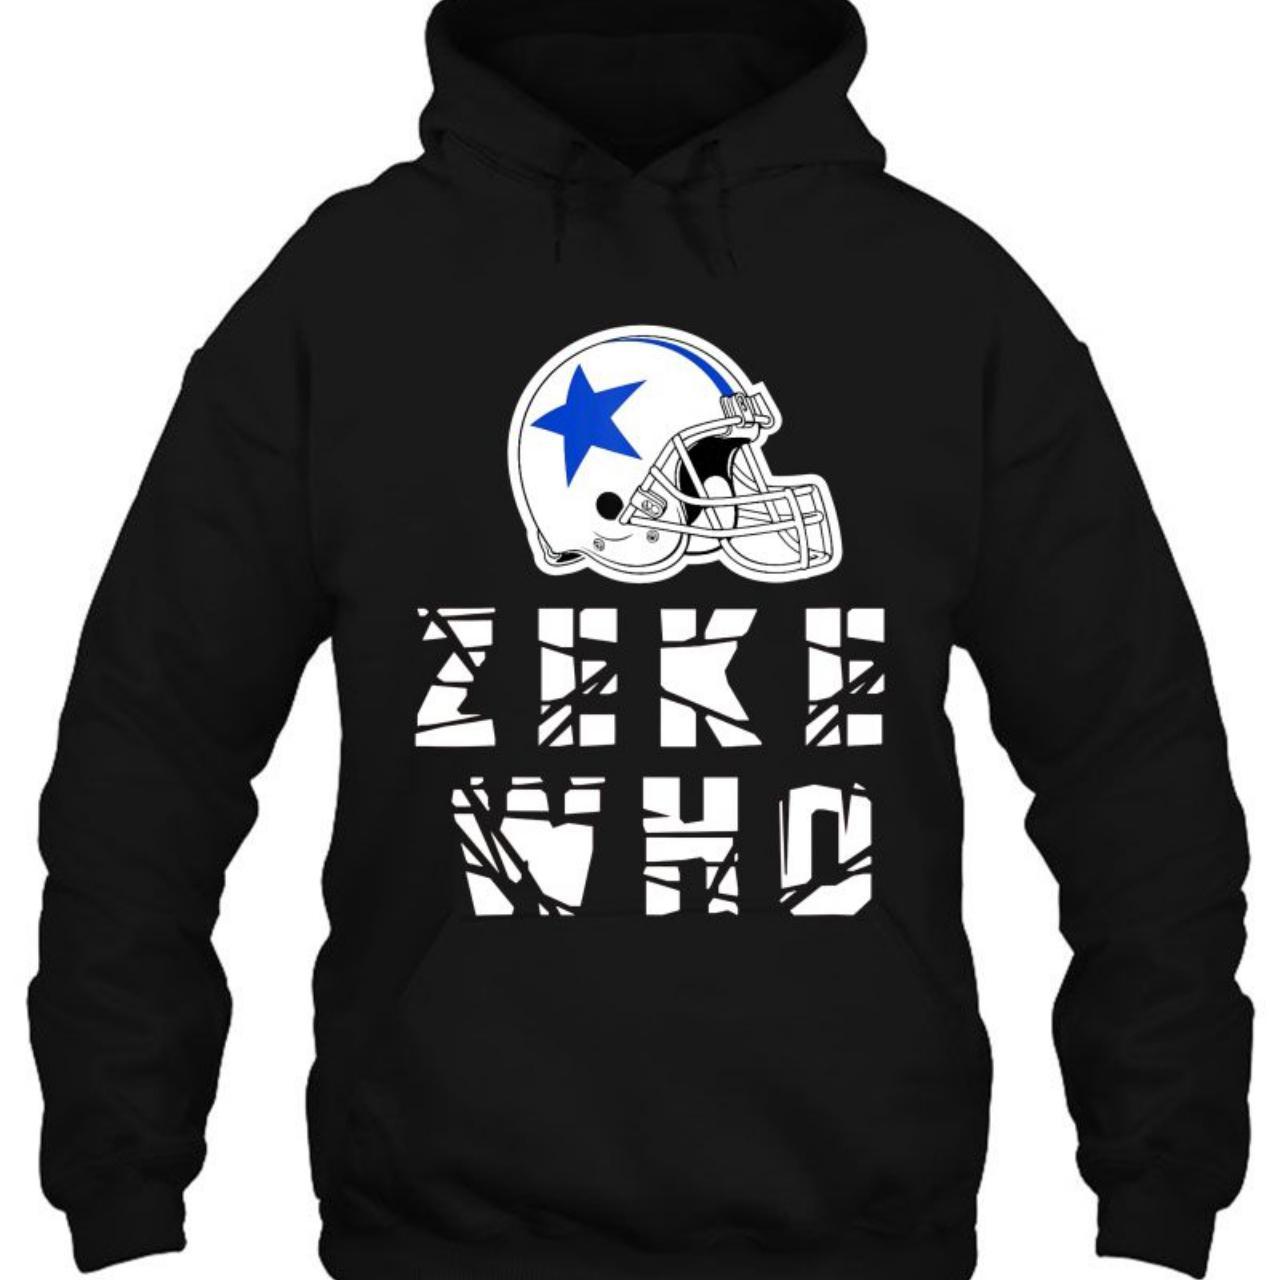 Product Image 1 - Zeke Who Stripe Football Dallas